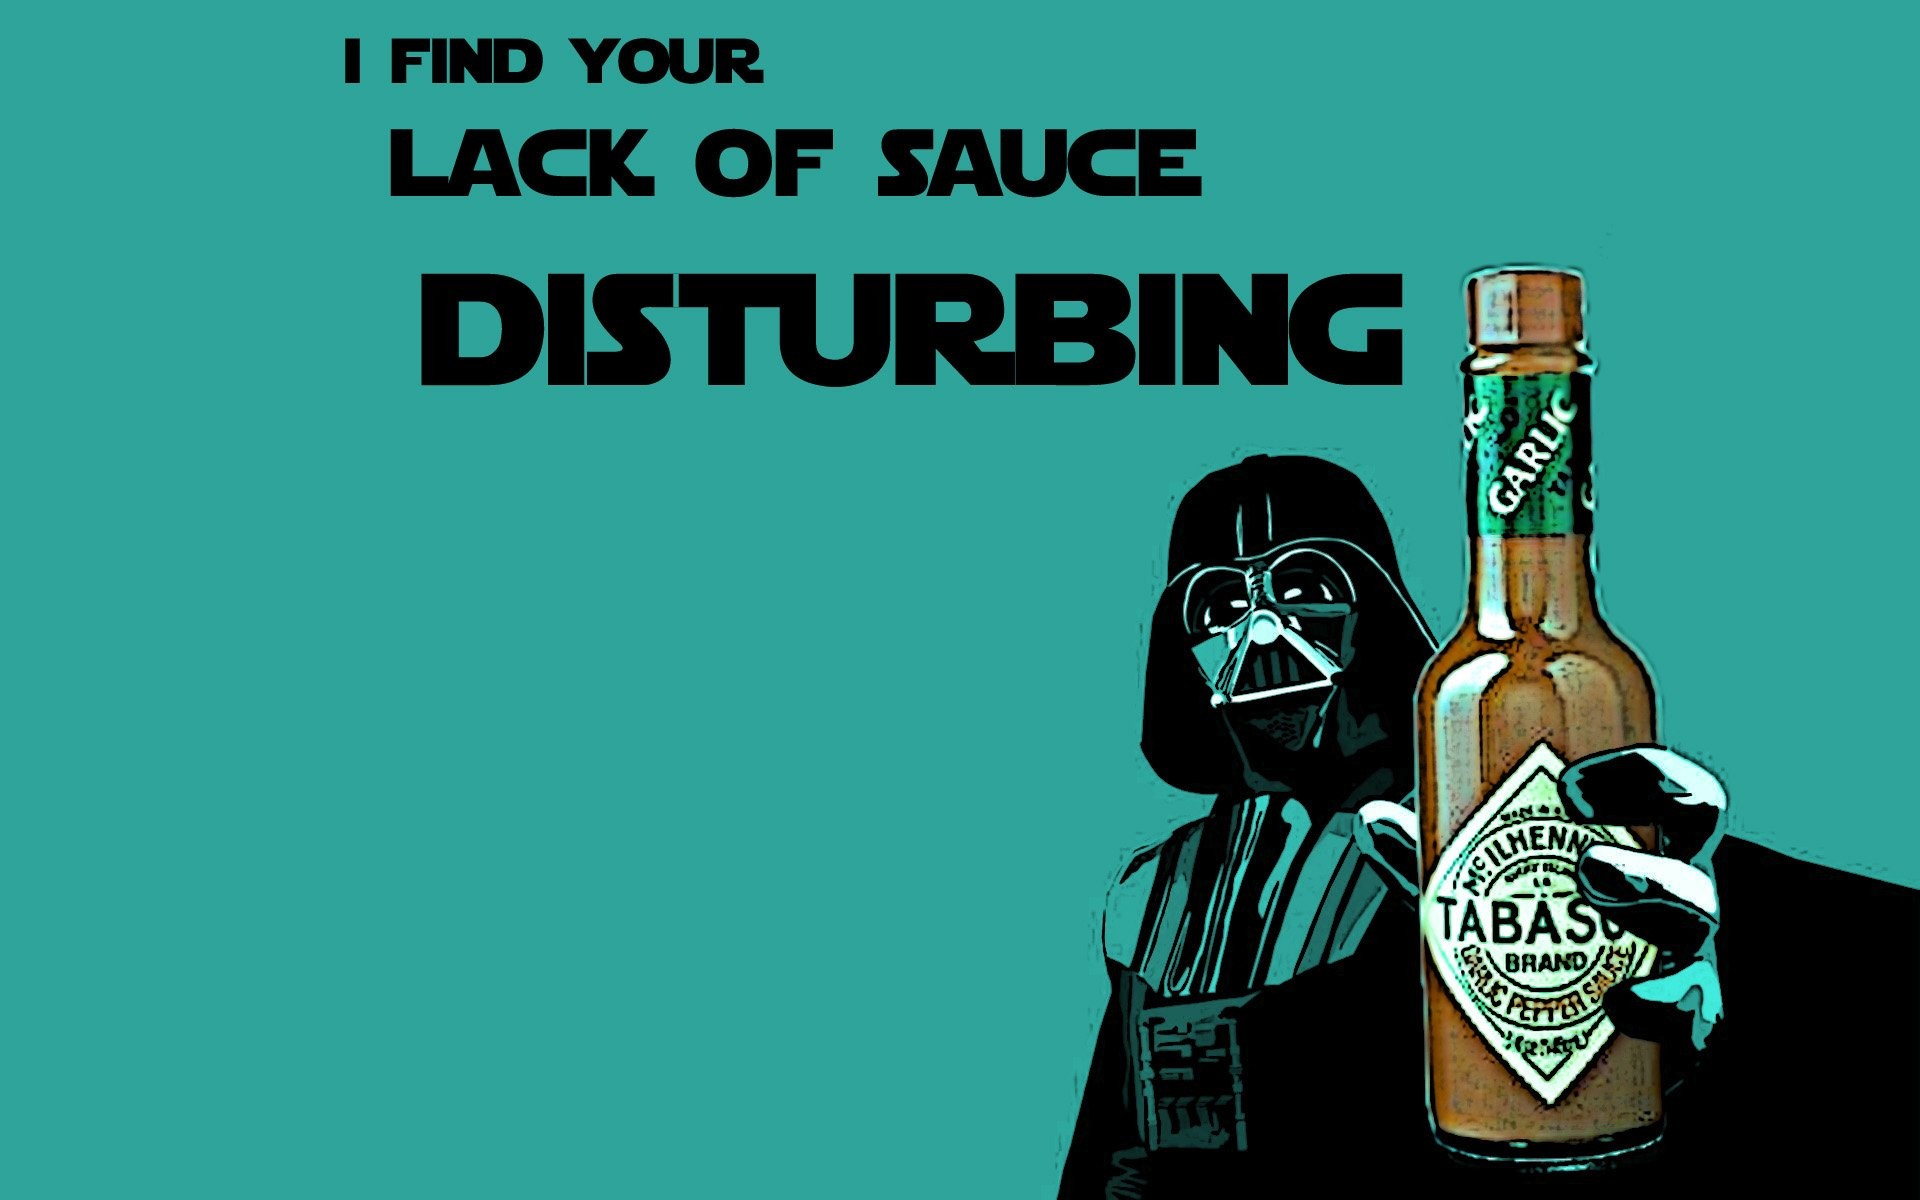 Sauce Dark Fun Funny Darth Vector Stock Image HD Abstract